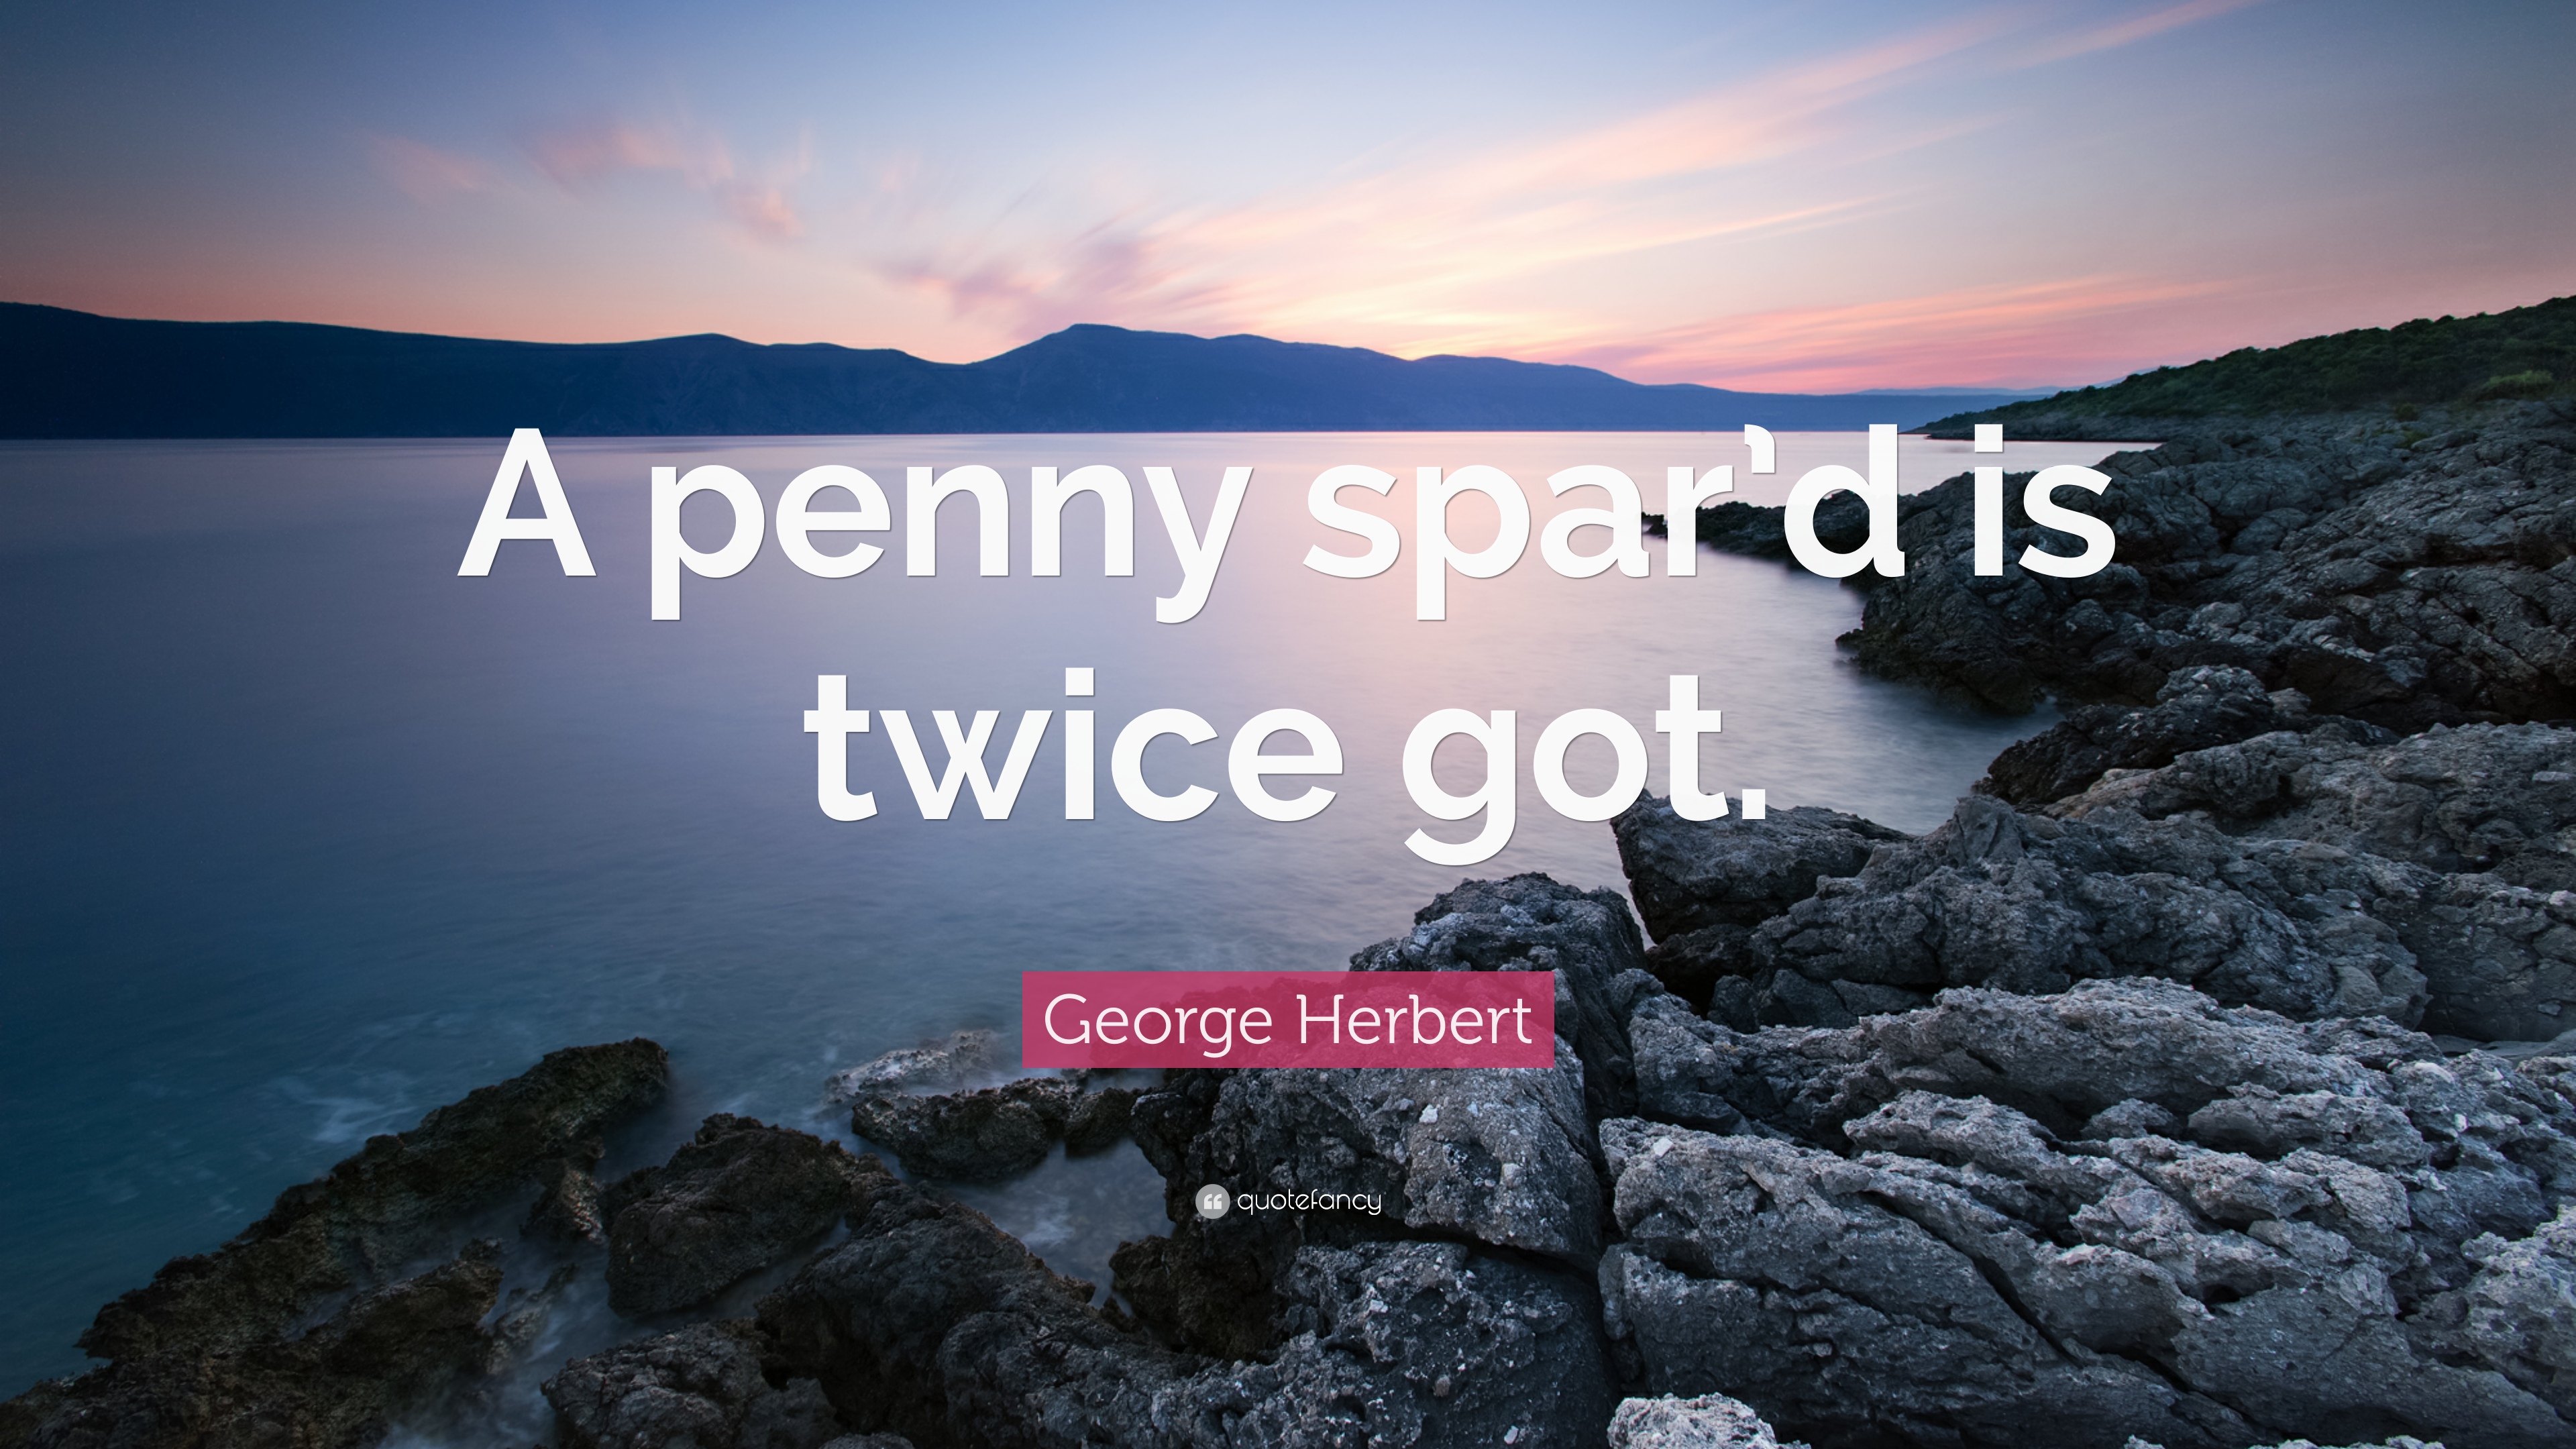 George Herbert Quote: “A penny spar'd is twice got.” 7 wallpaper